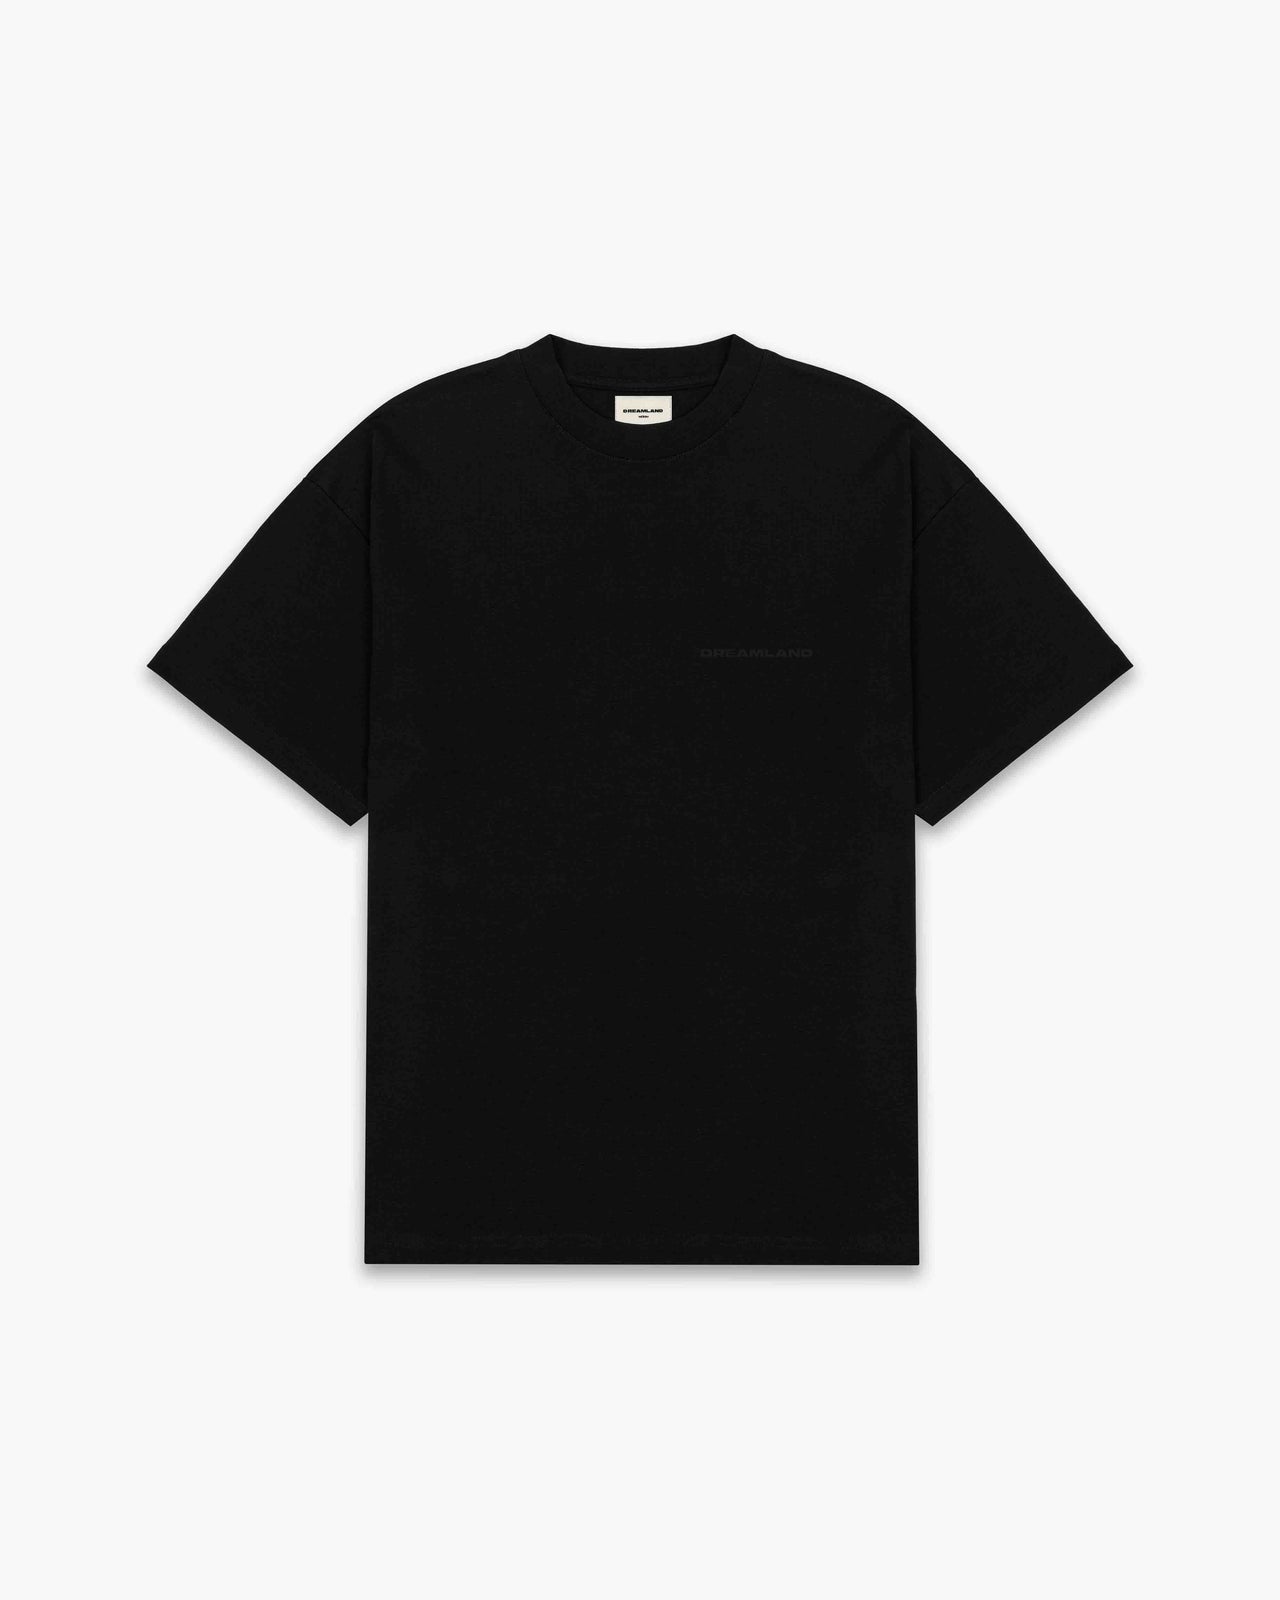 Black Tonal T-Shirt